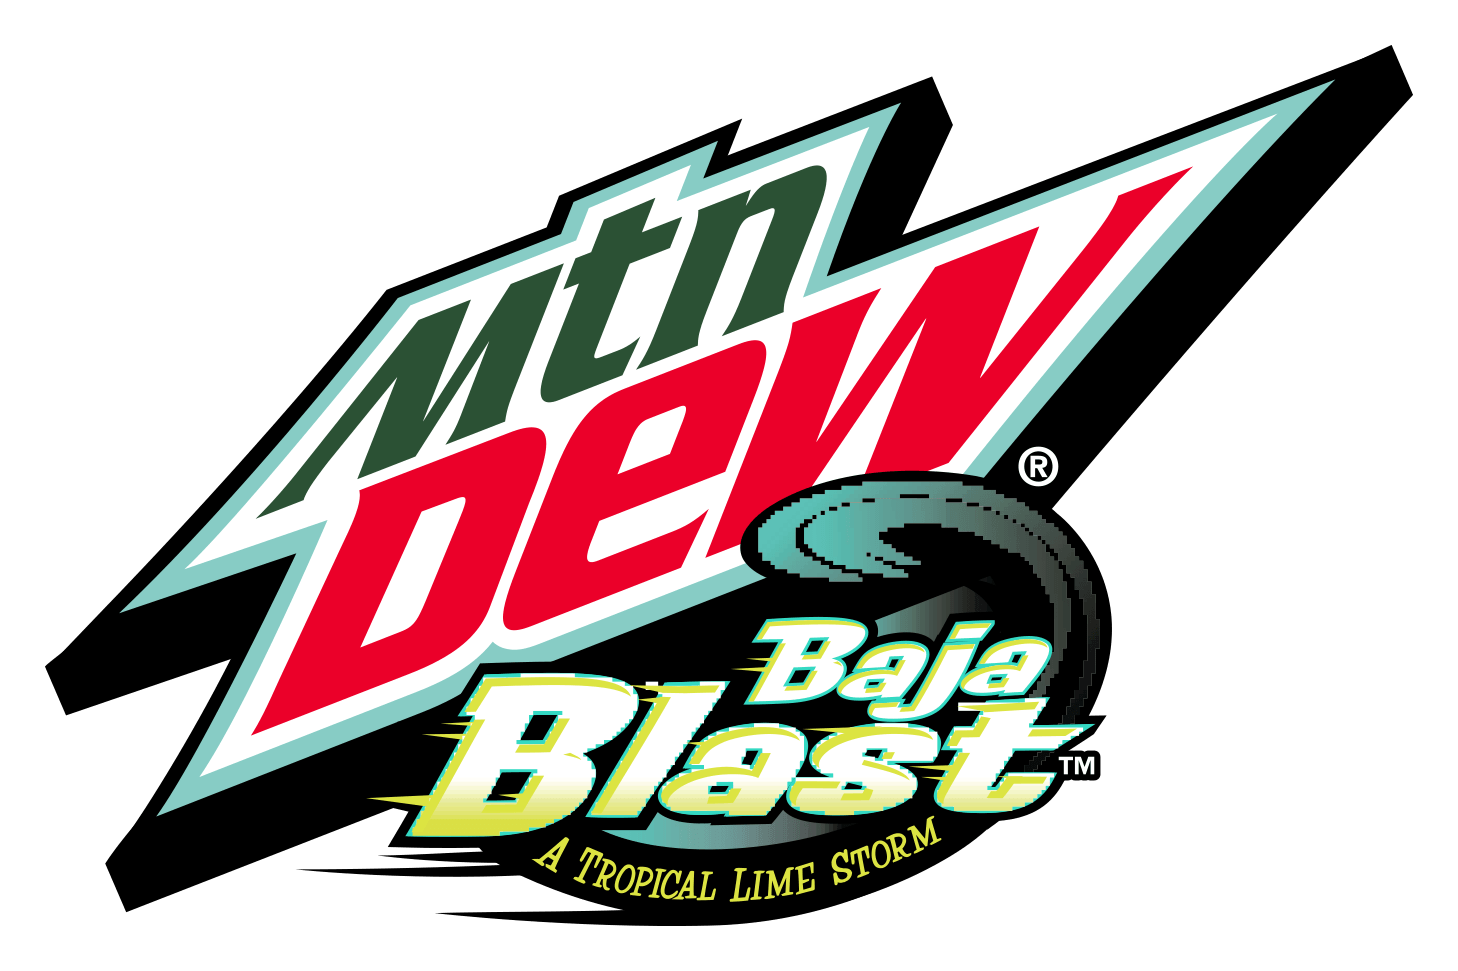 Mtn Dew Logo - Can anyone make a Mtn Dew Baja Blast logo for me? I tried but I don